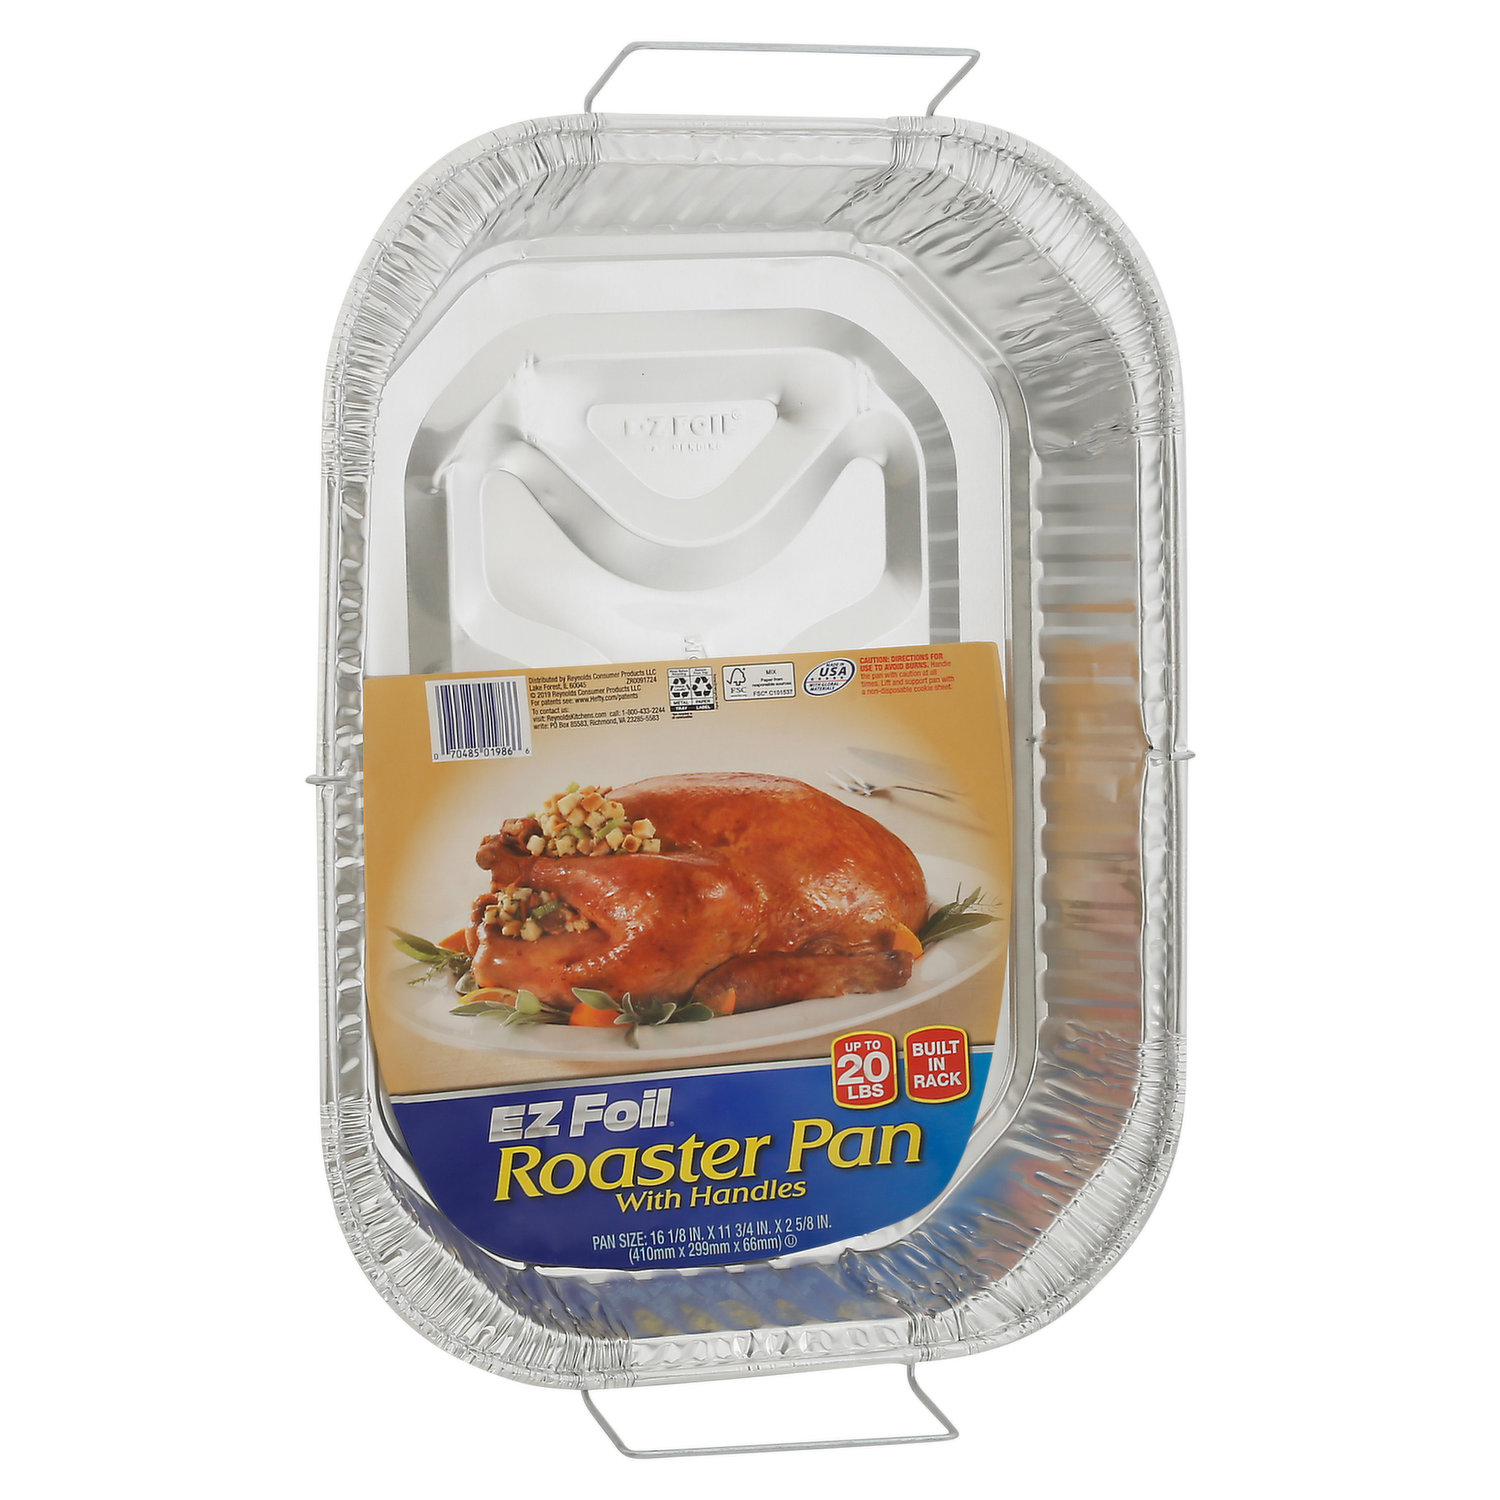 EZ Foil Roaster Pans, Up to 20 Pound Capacity, 2 Count